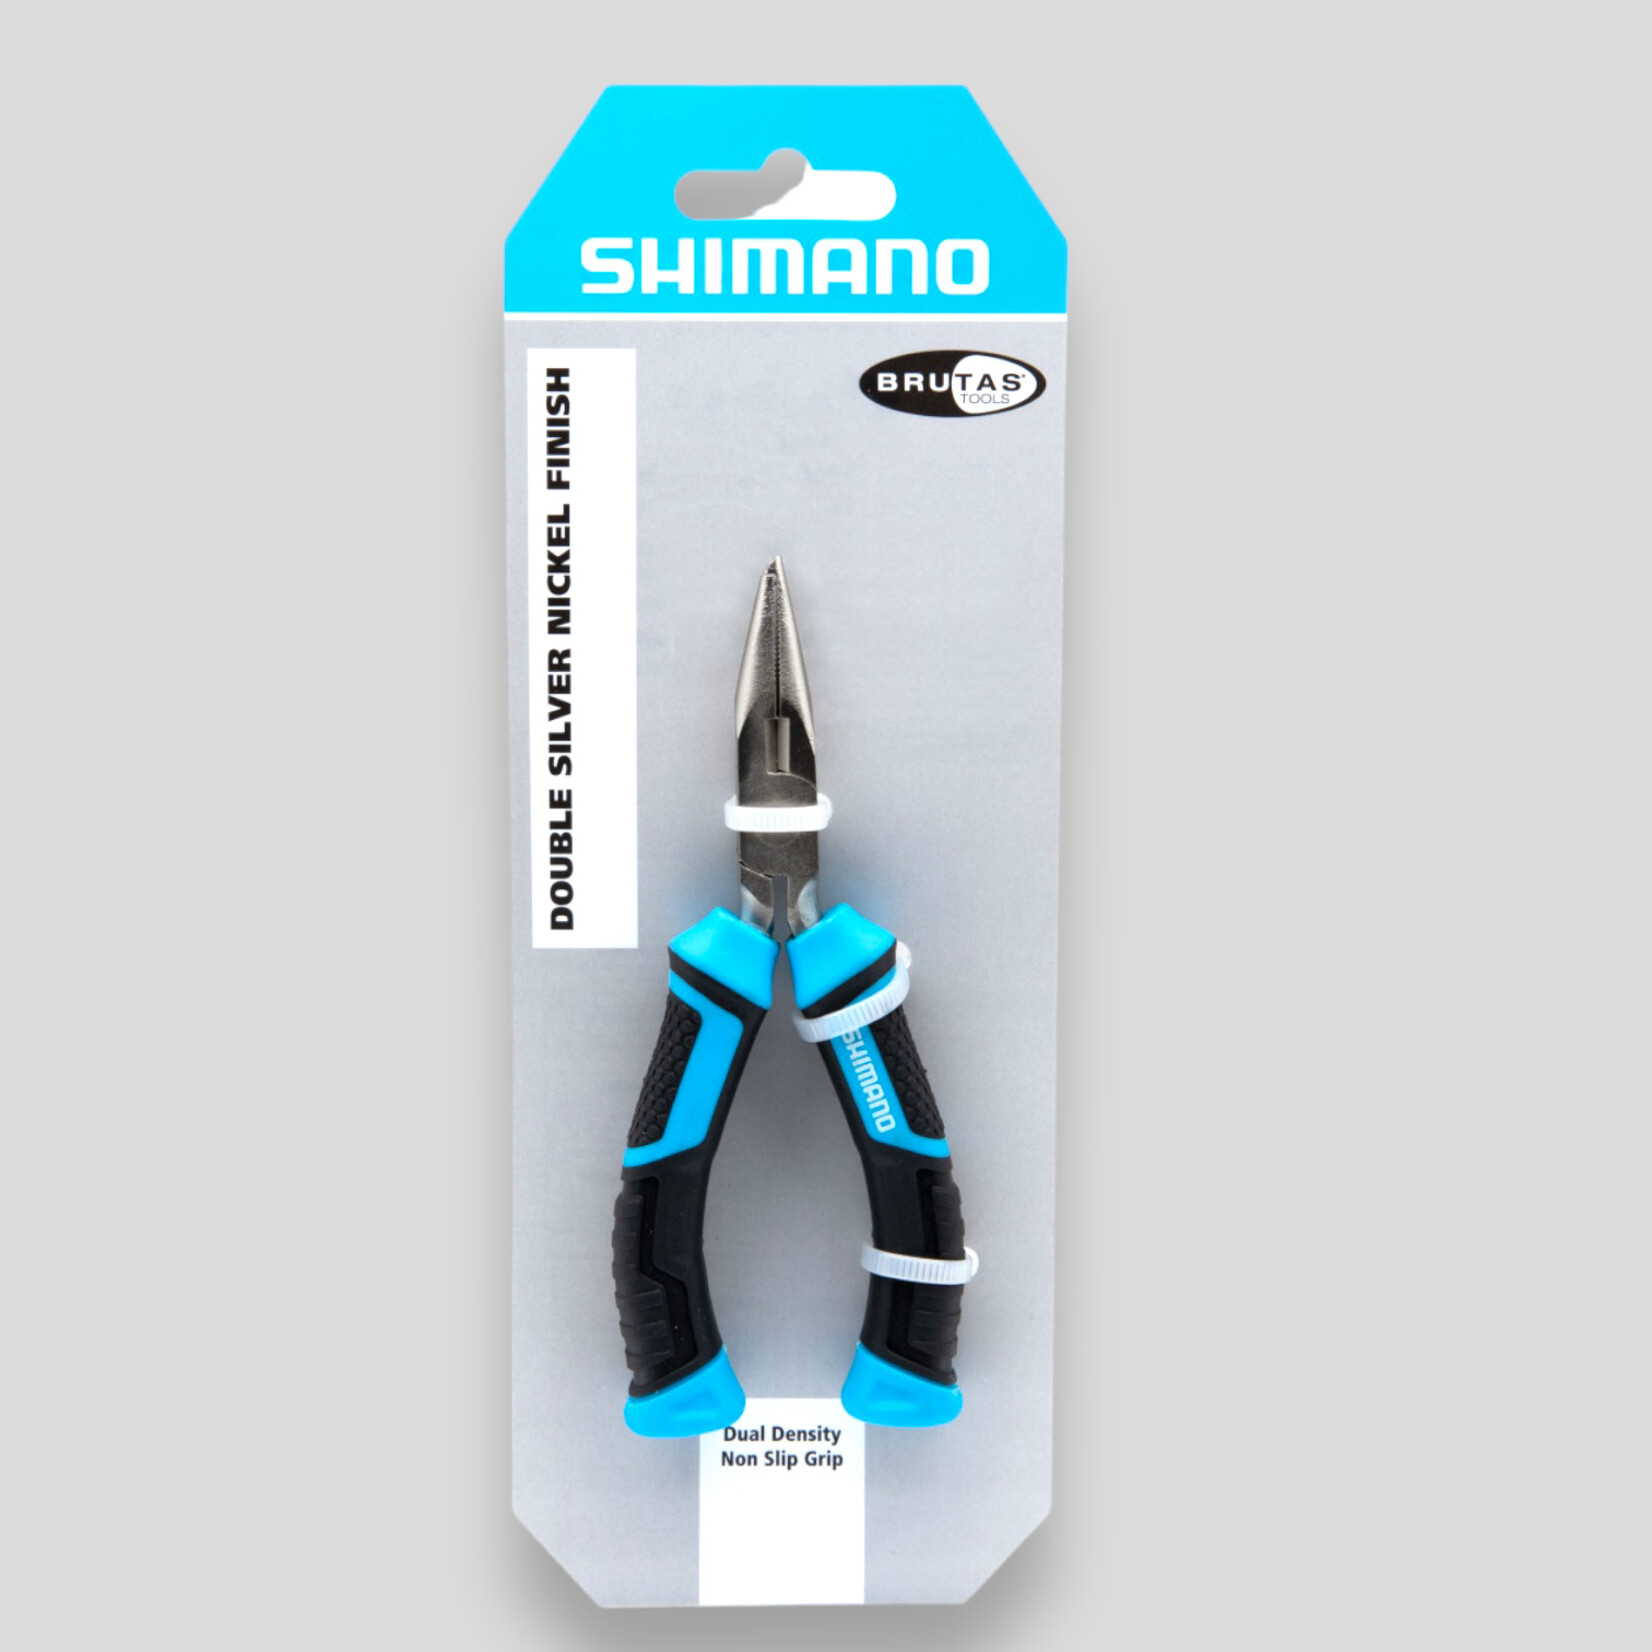 Shimano Shimano Brutas Tools